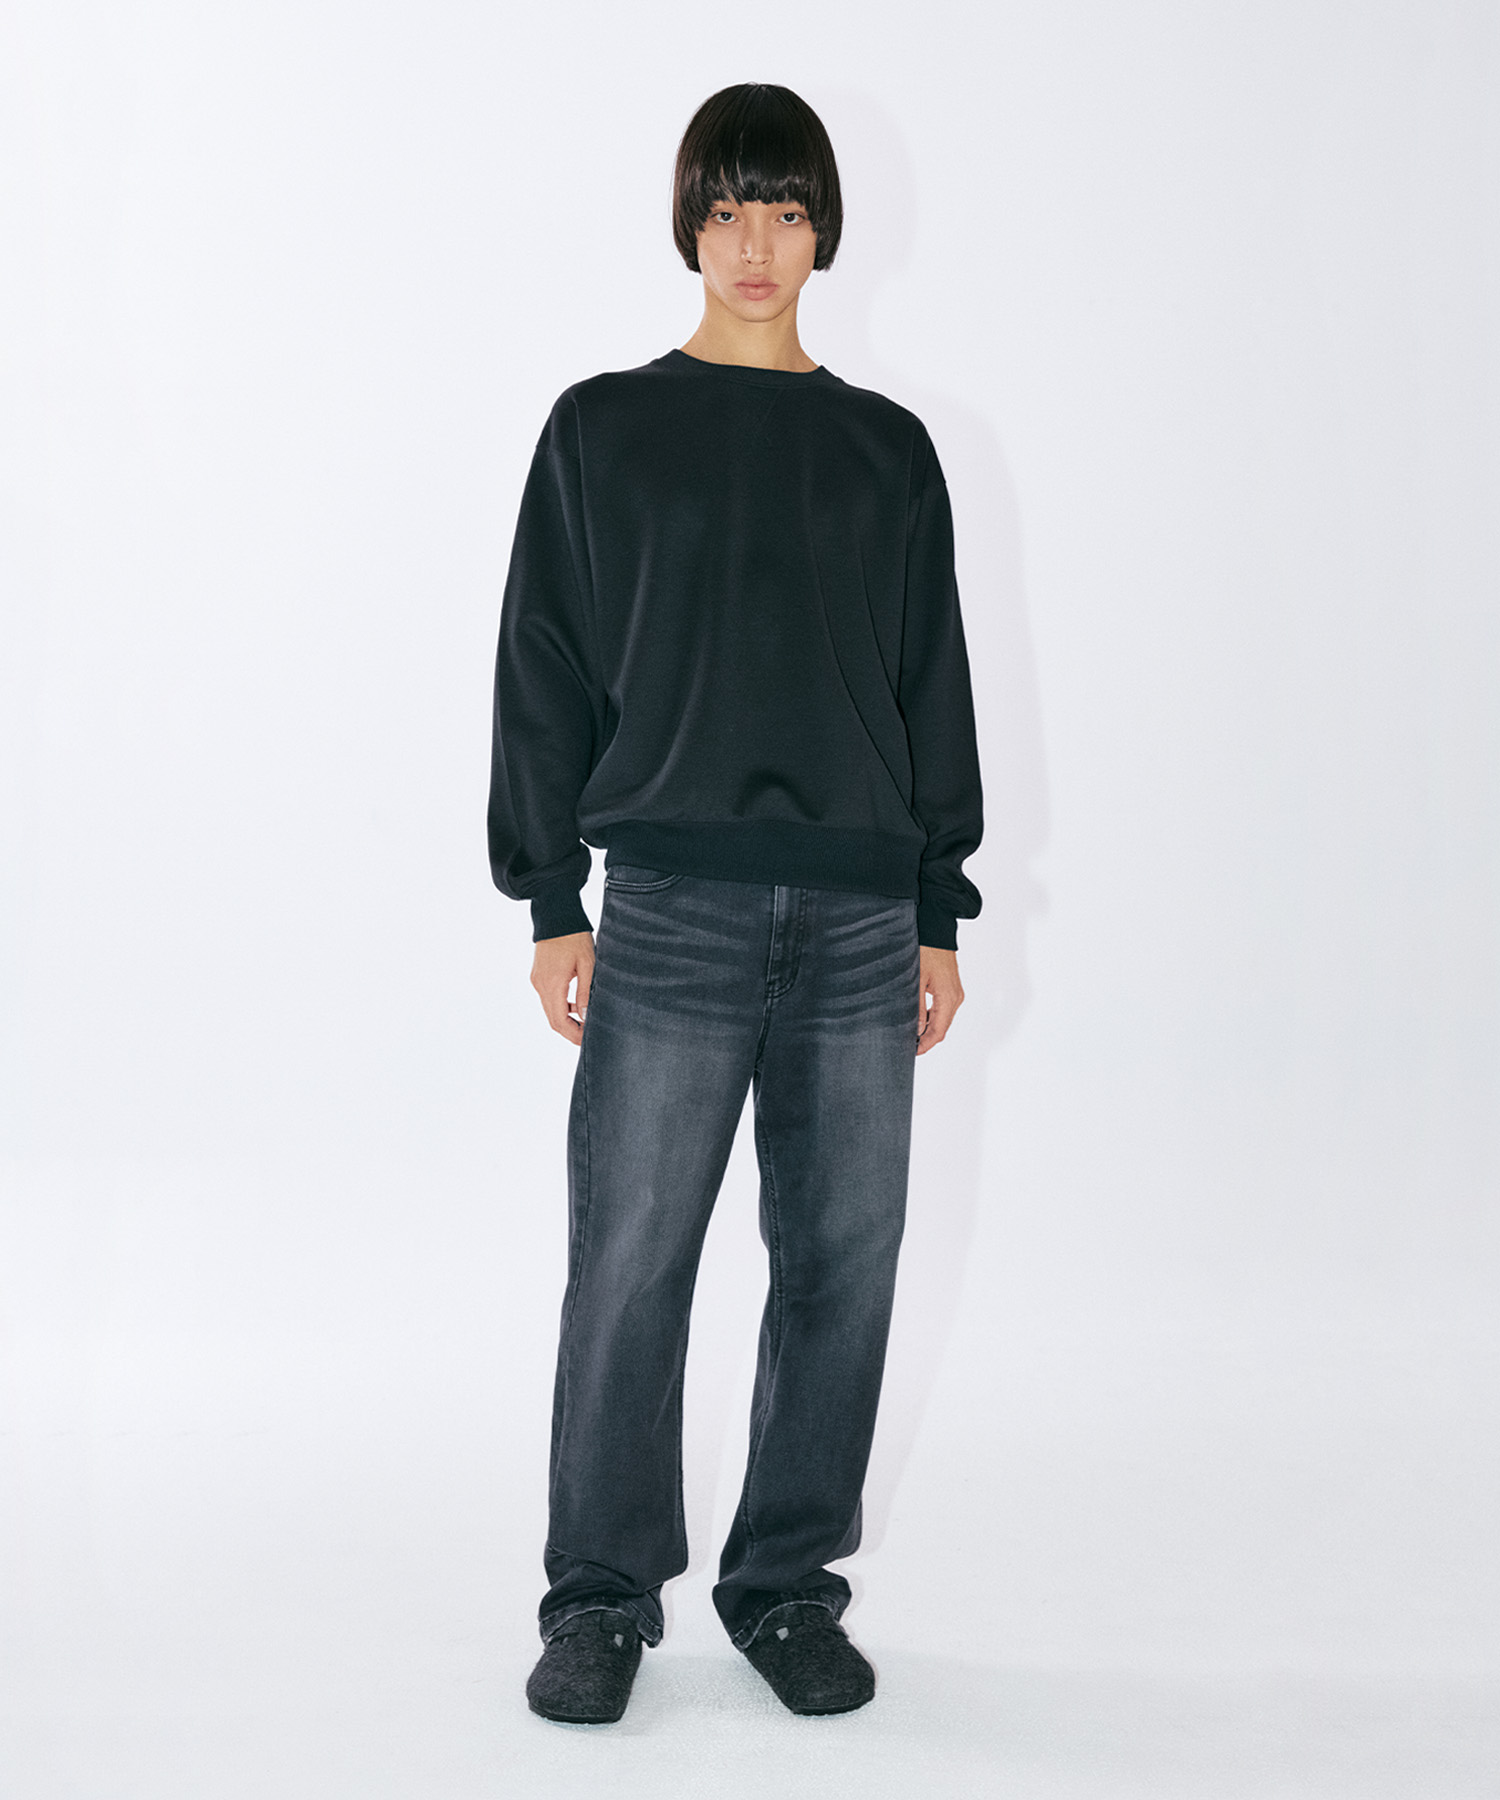 Double Face Half Raglan Sweatshirt - Black